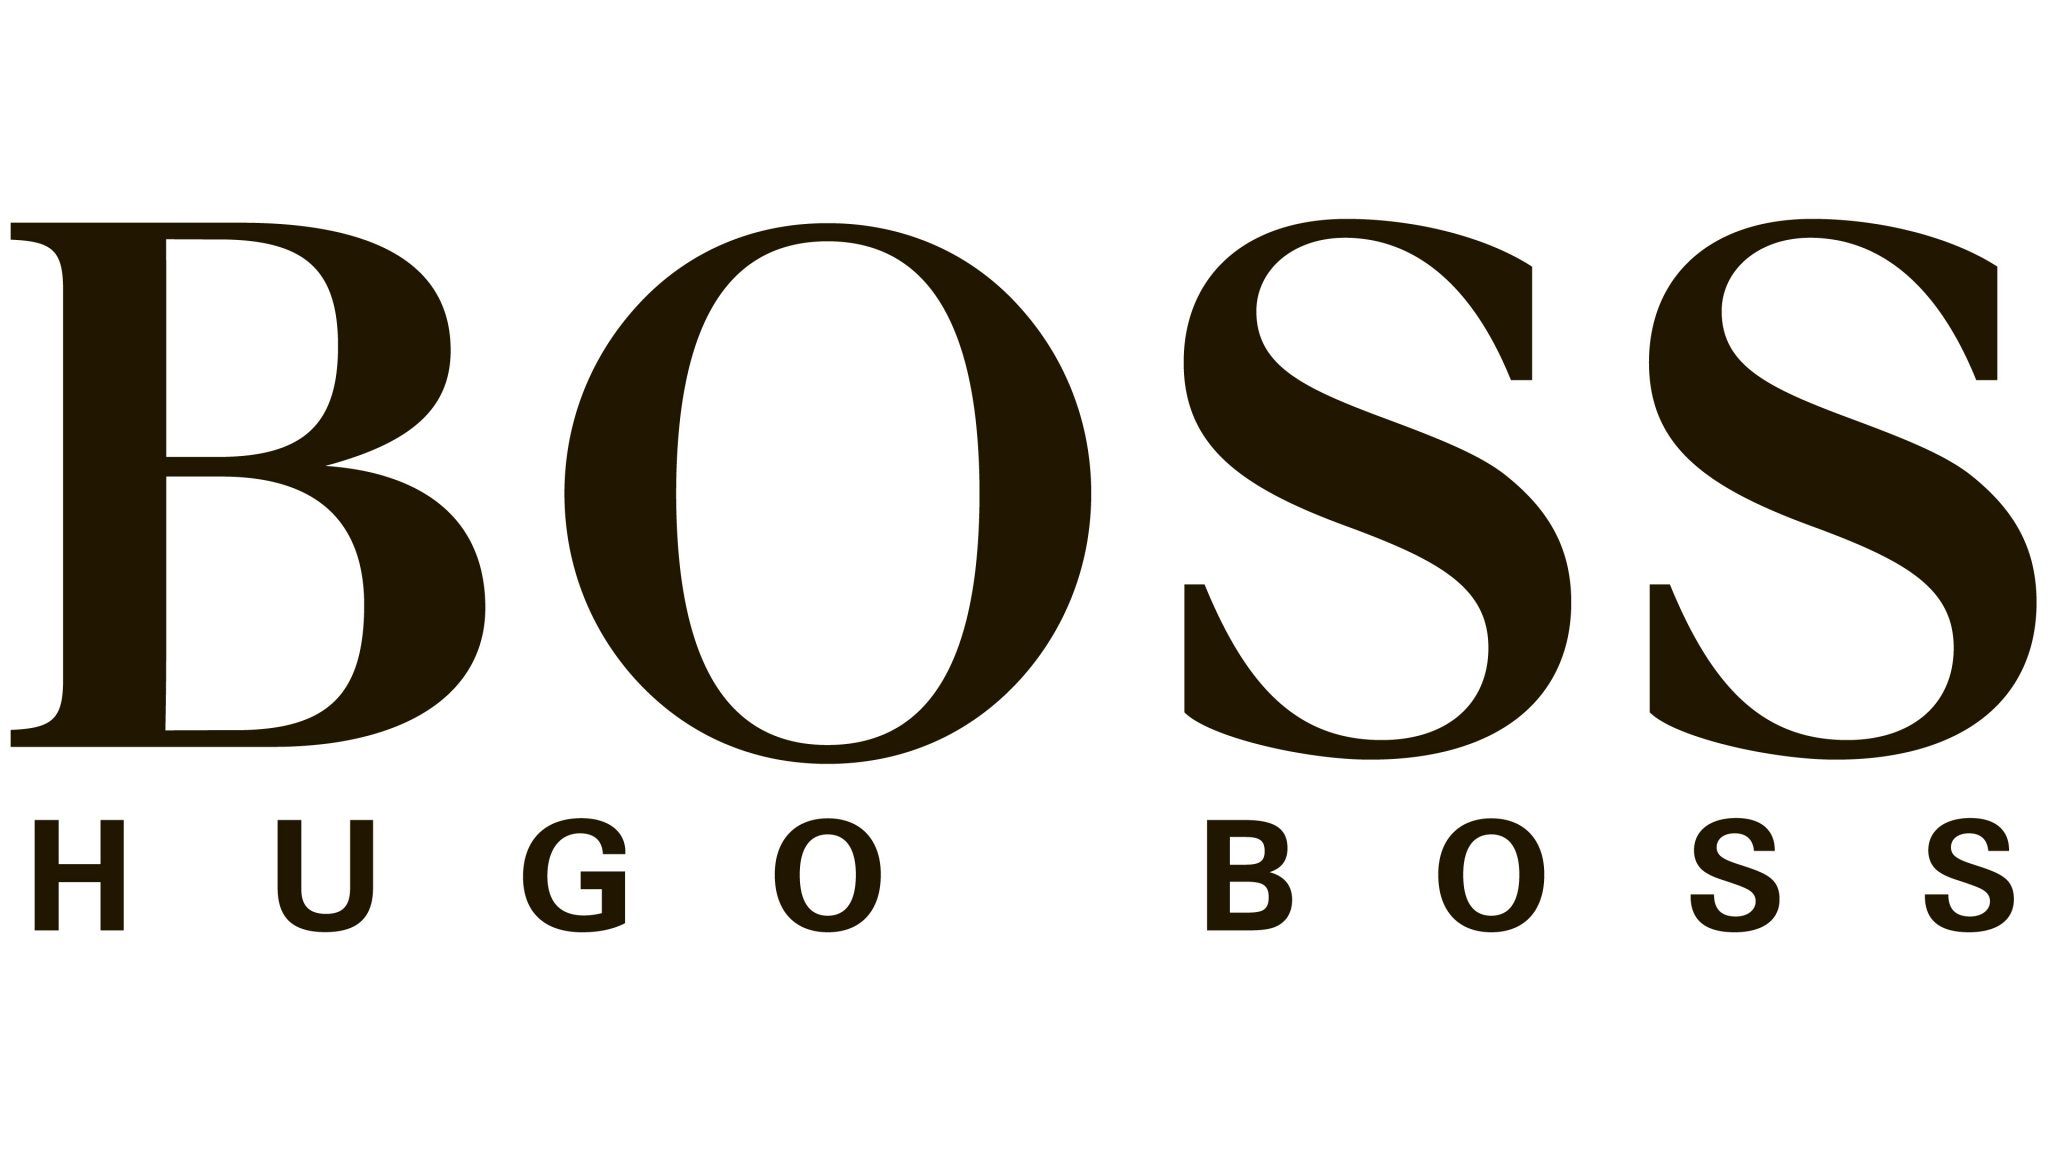 Hugo Boss Wallpapers